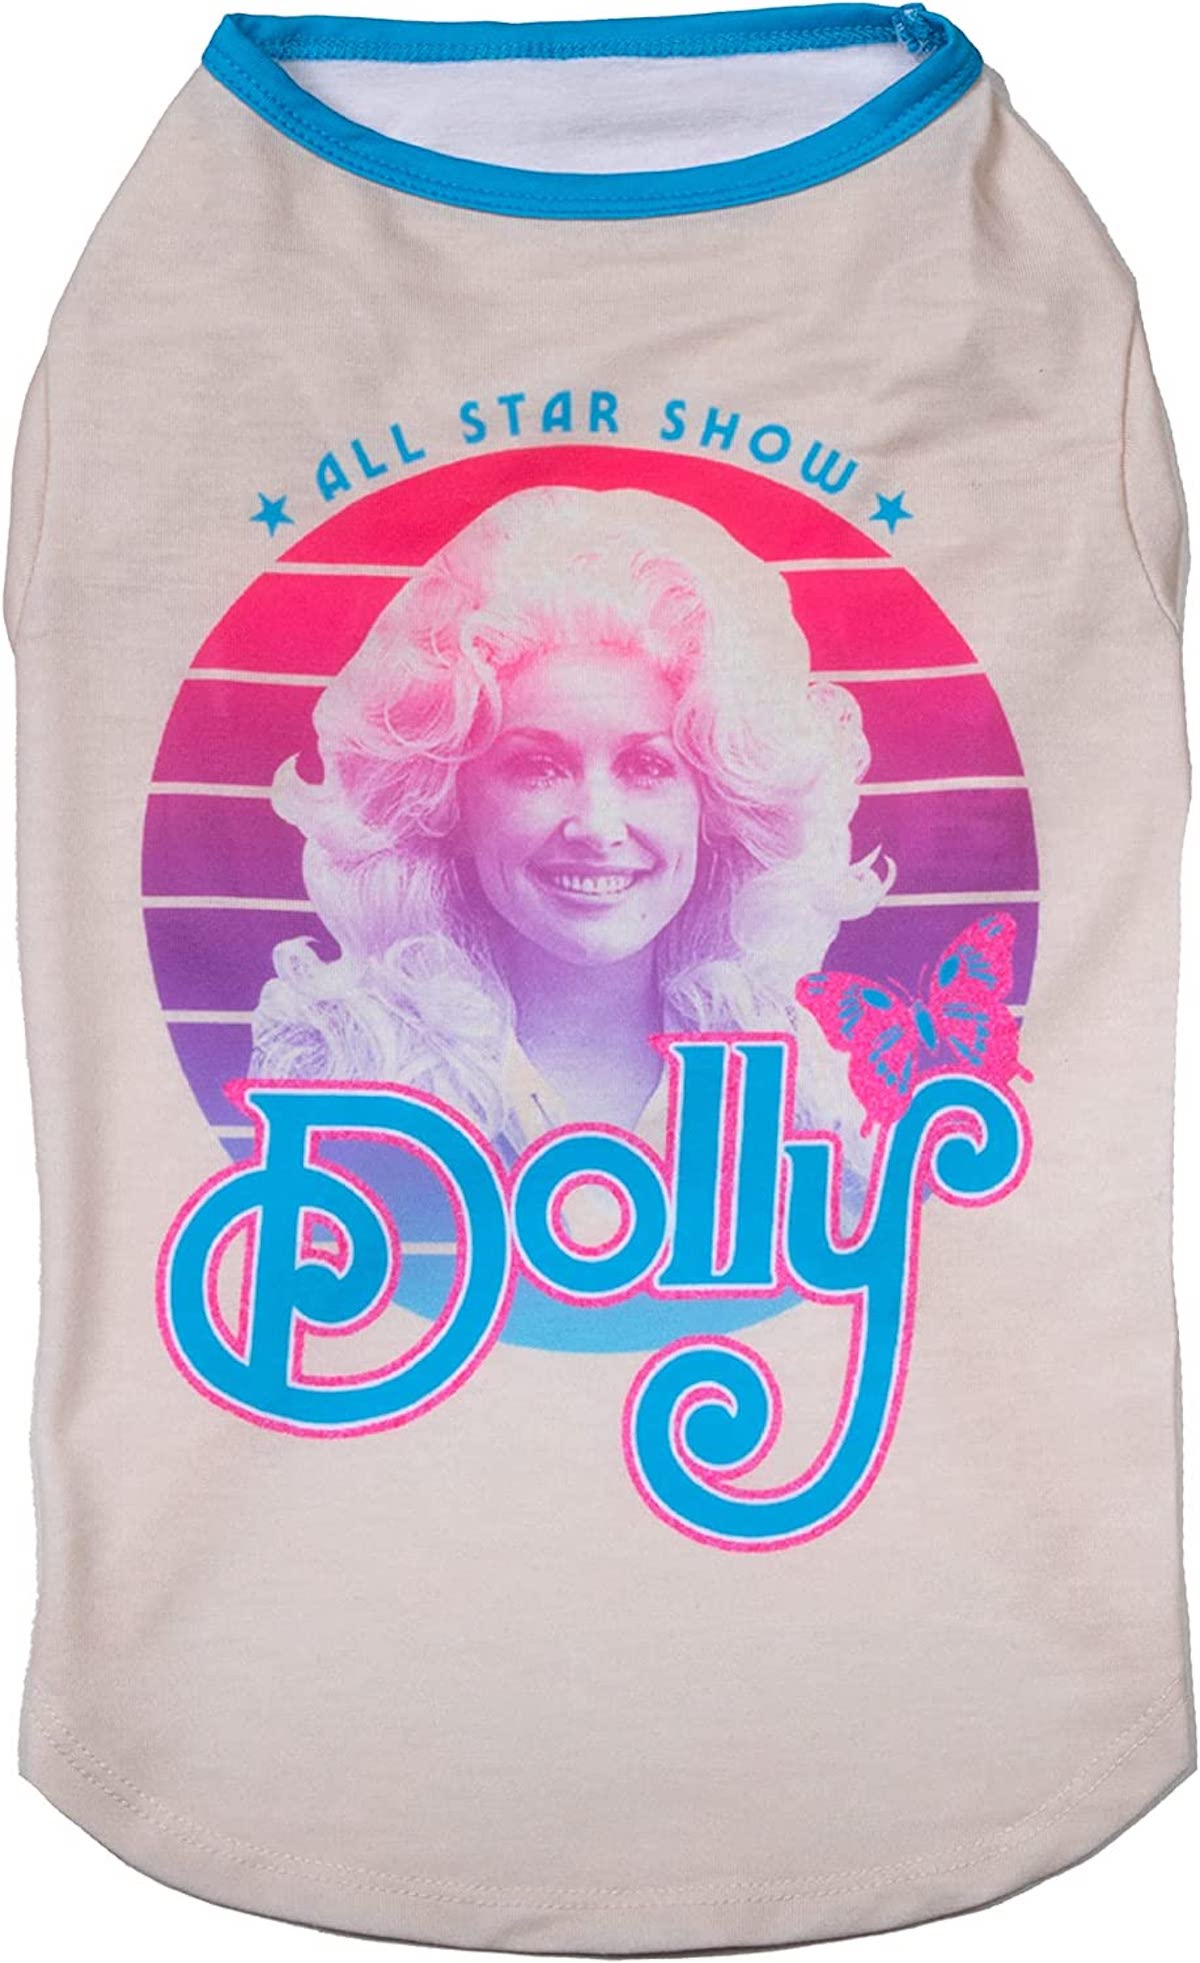 Dolly Parton dog shirt